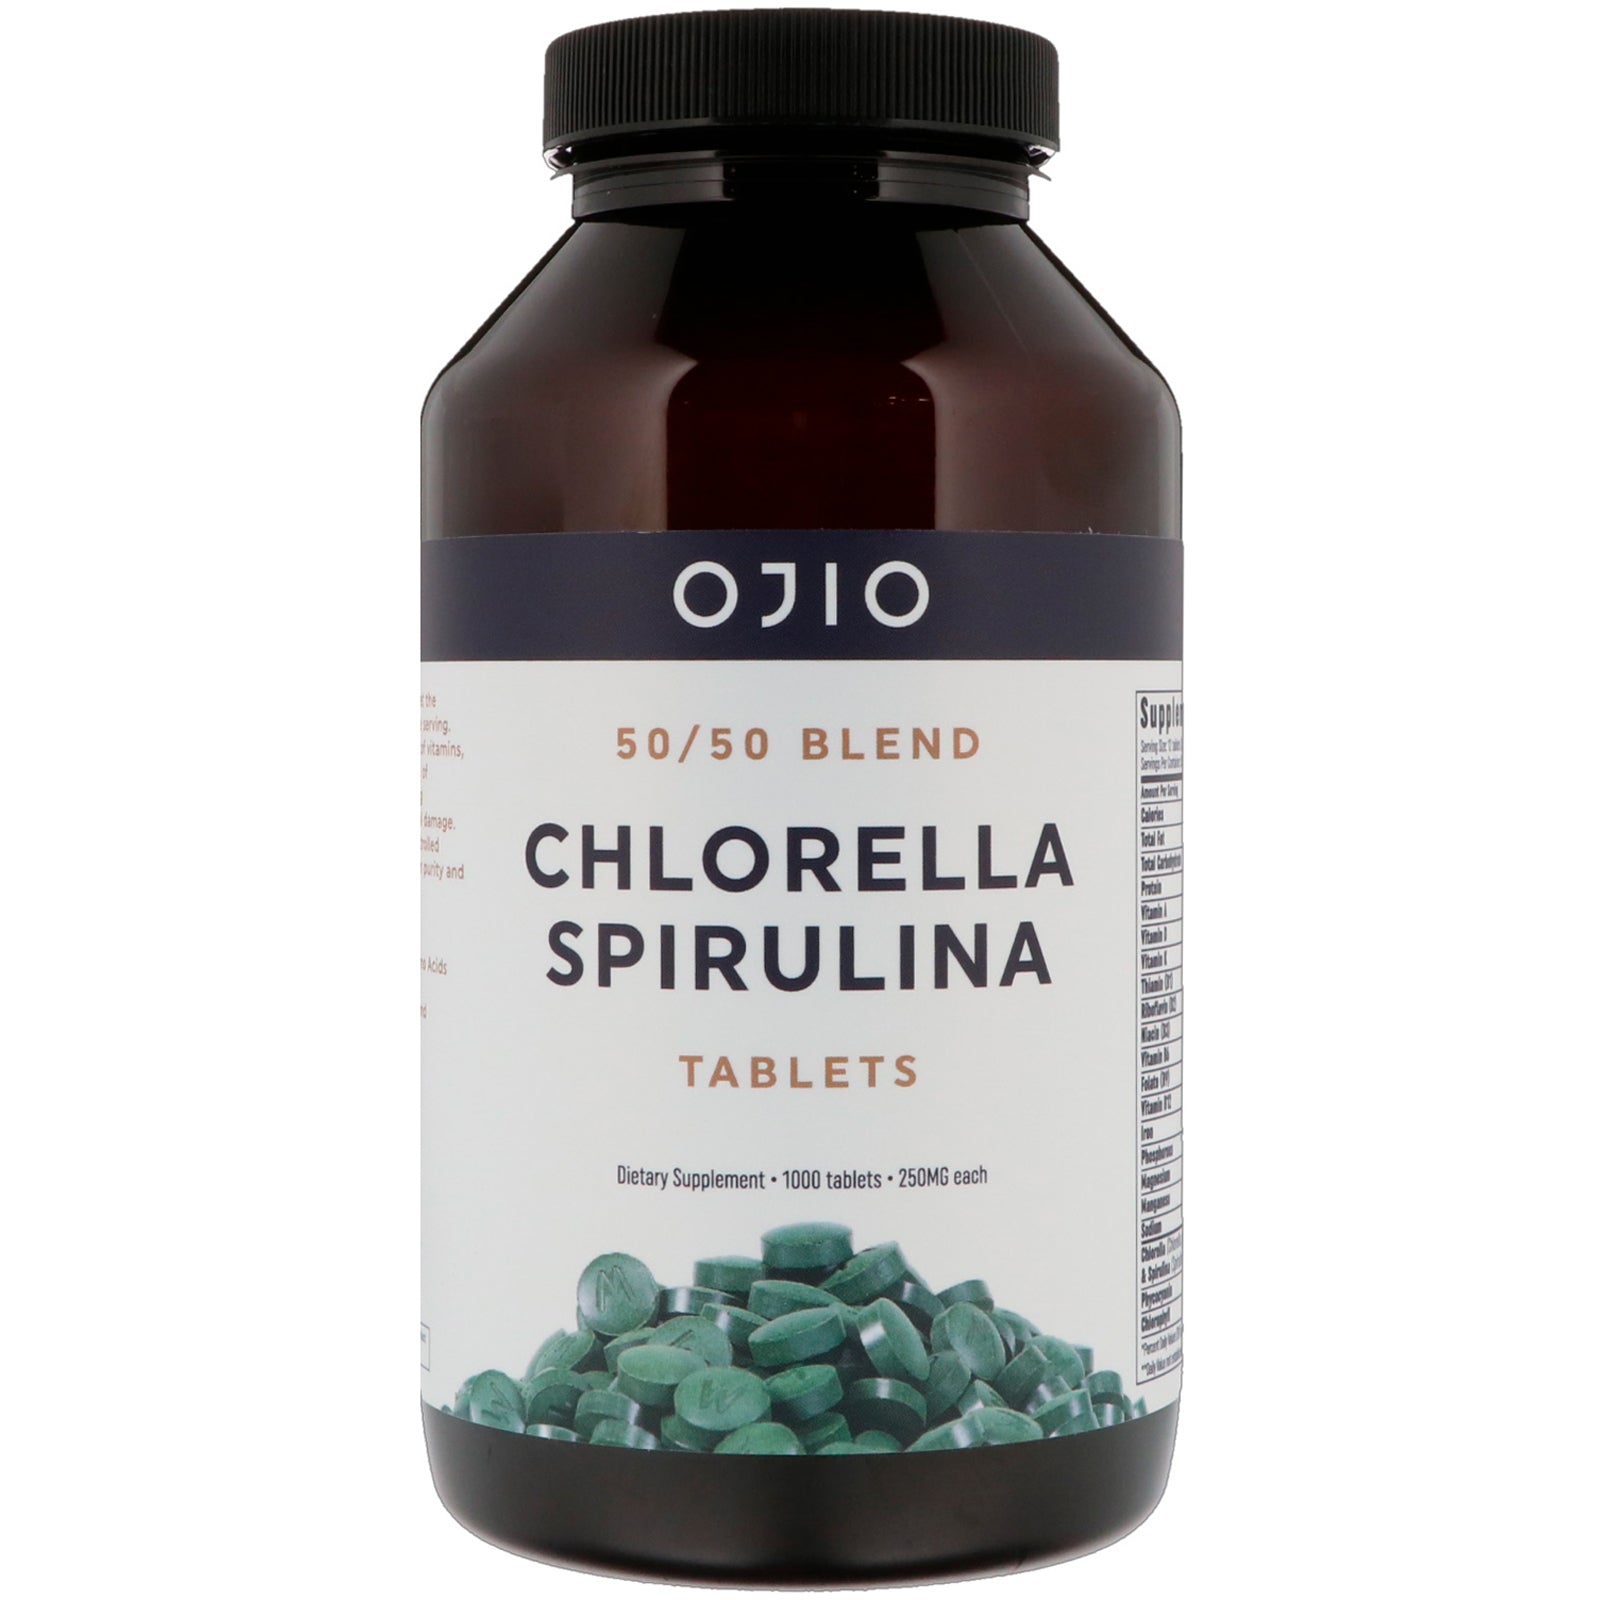 Ojio, Chlorella Spirulina Tablets, 50/50 Blend, 250 mg Tablets